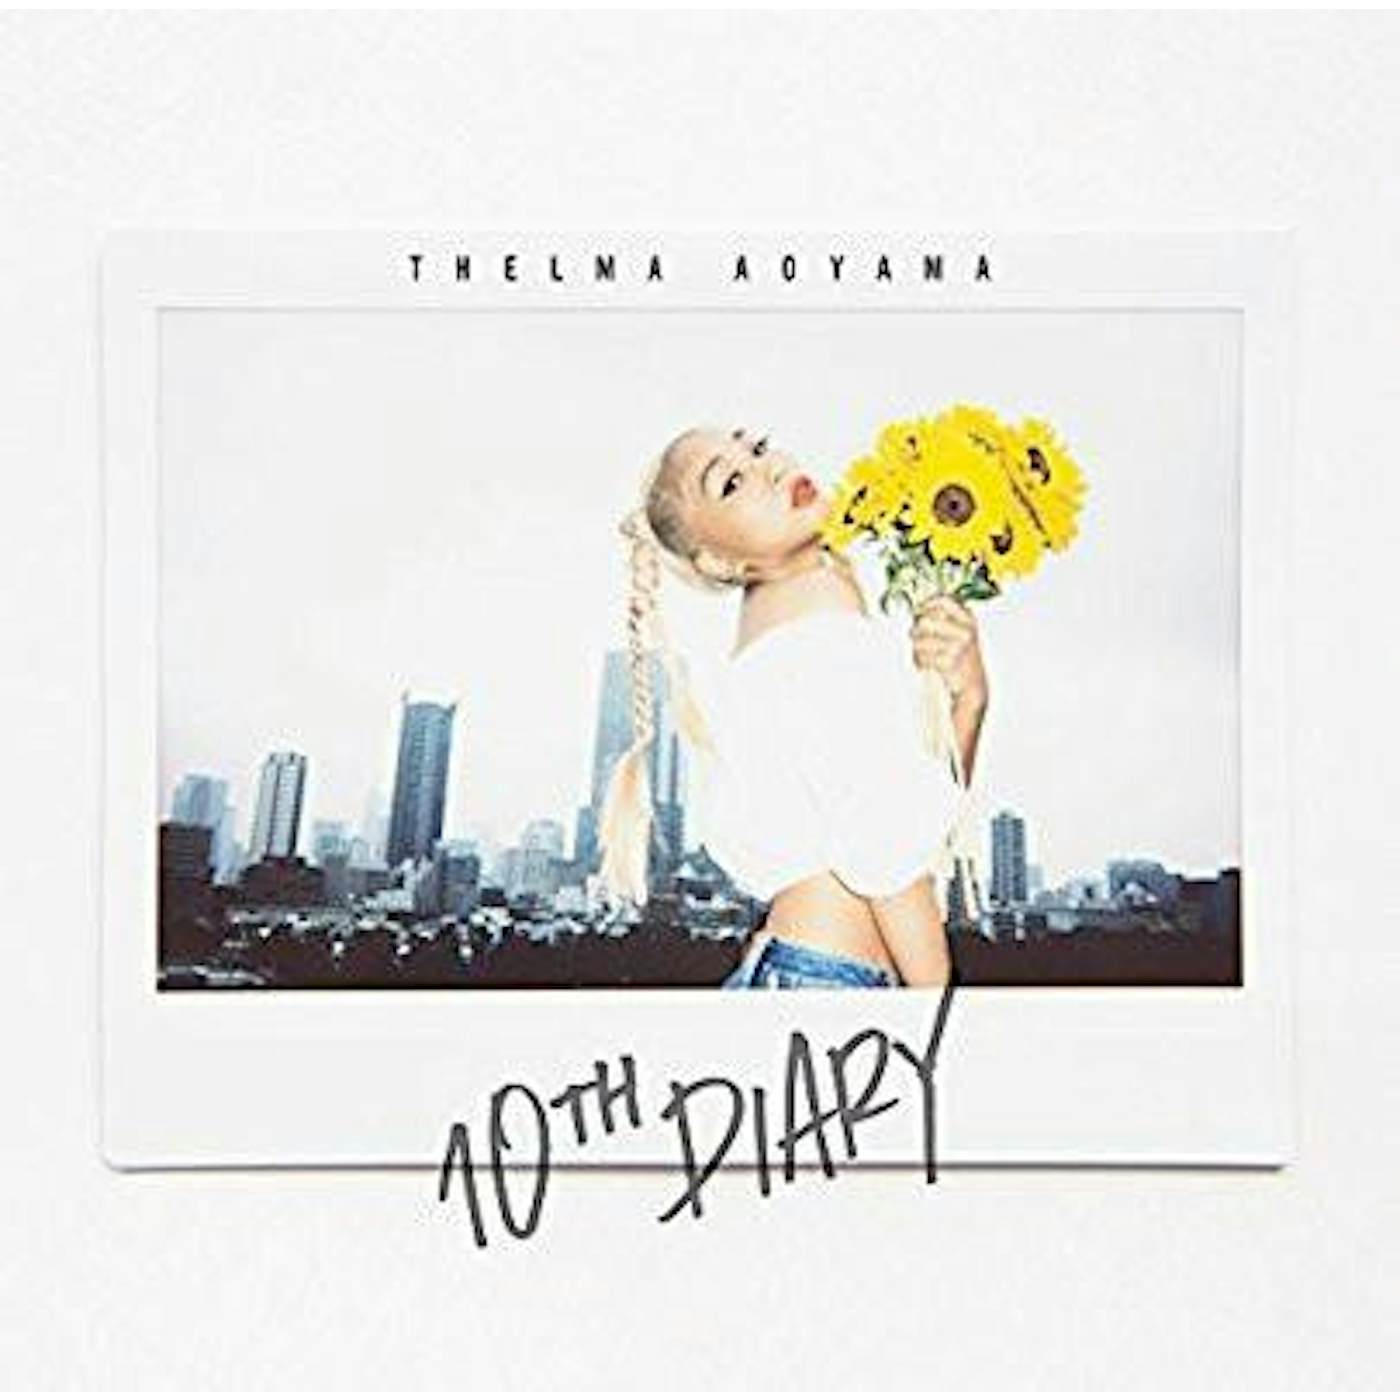 Thelma Aoyama 10TH DIARY CD